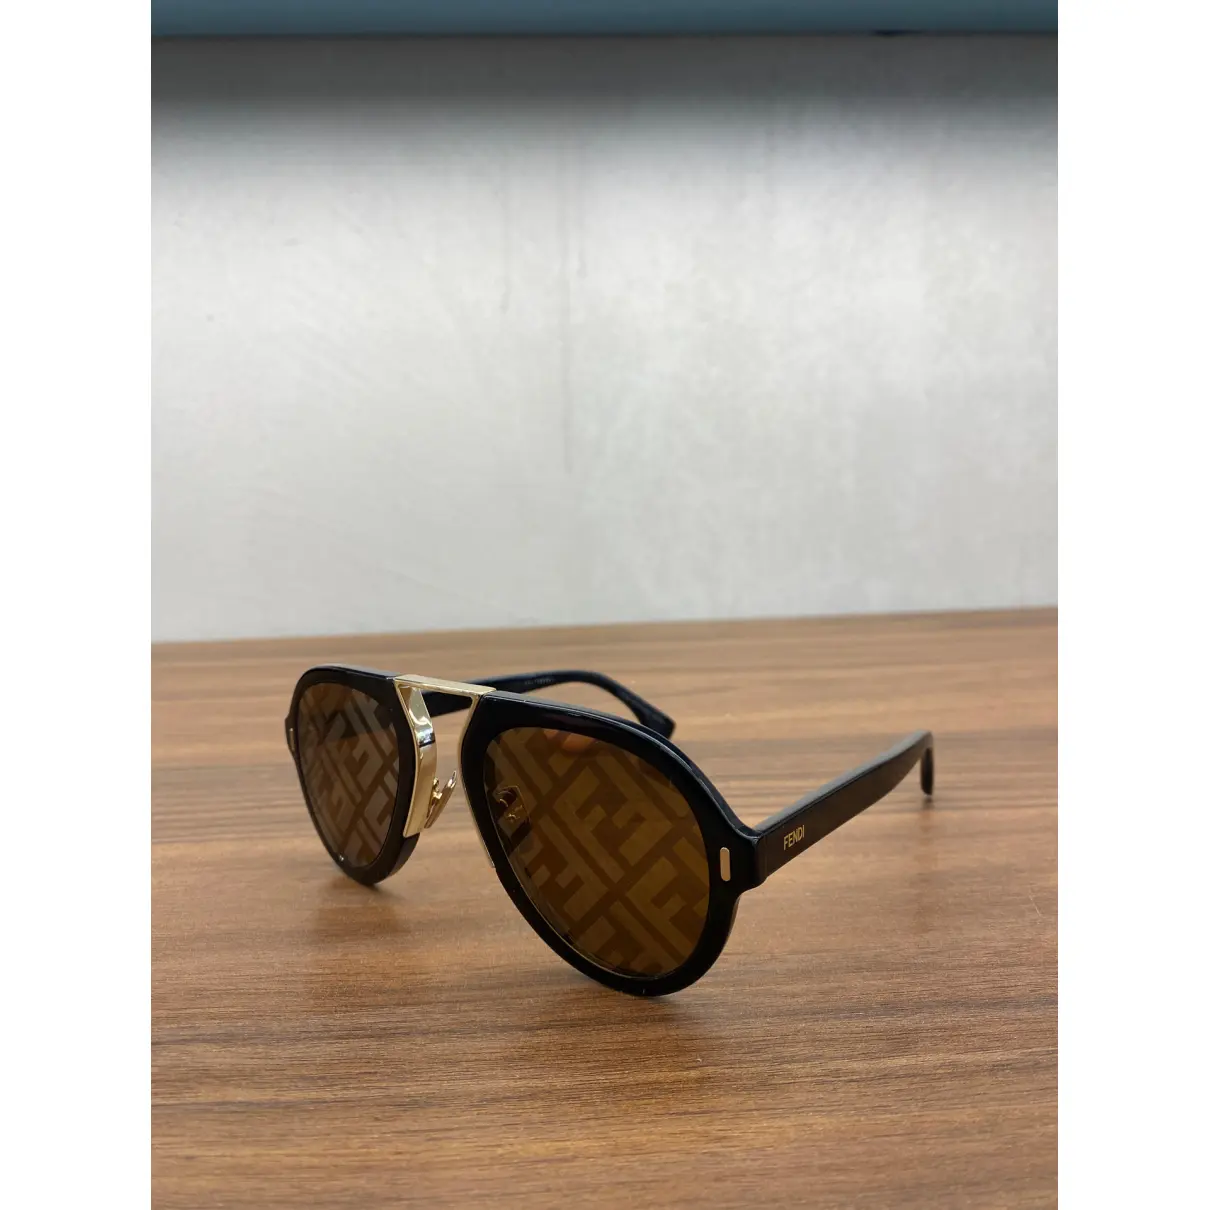 Buy Fendi Sunglasses online